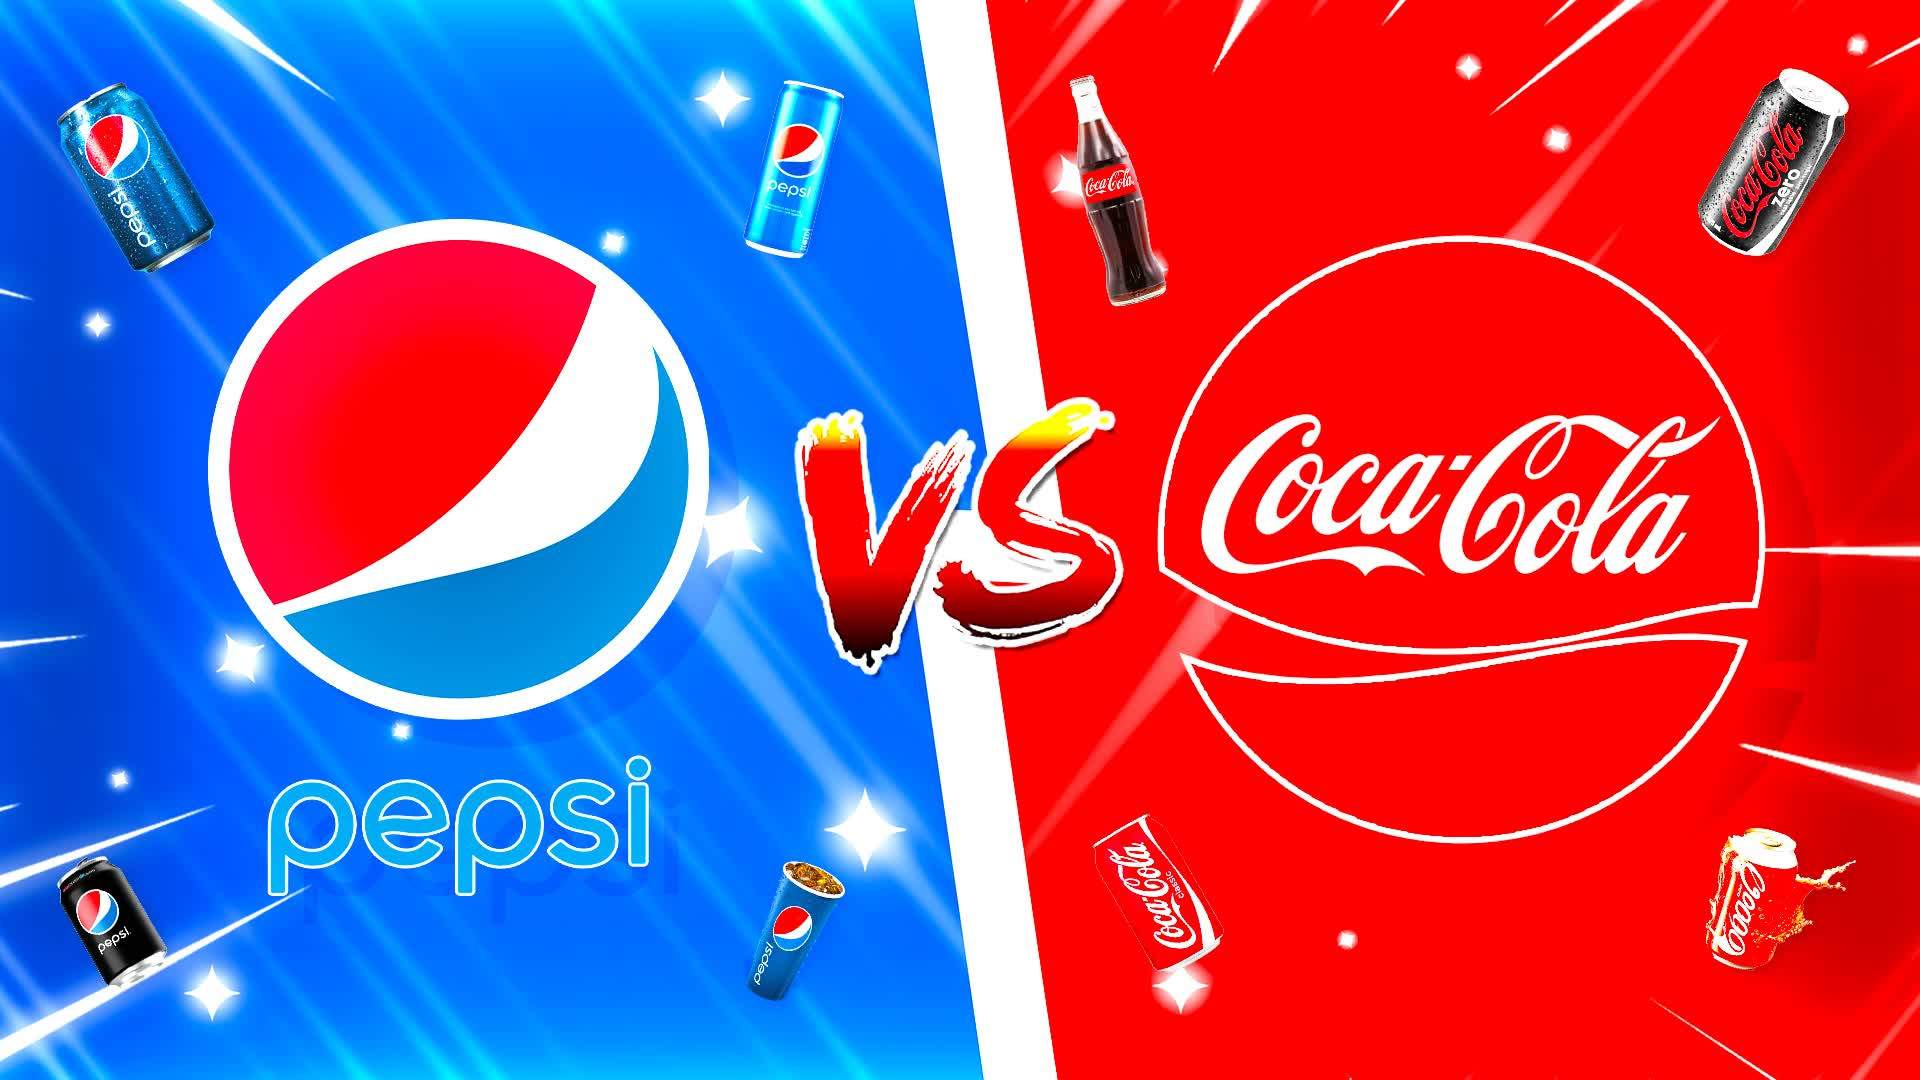 💙 Pepsi vs Coke ❤️